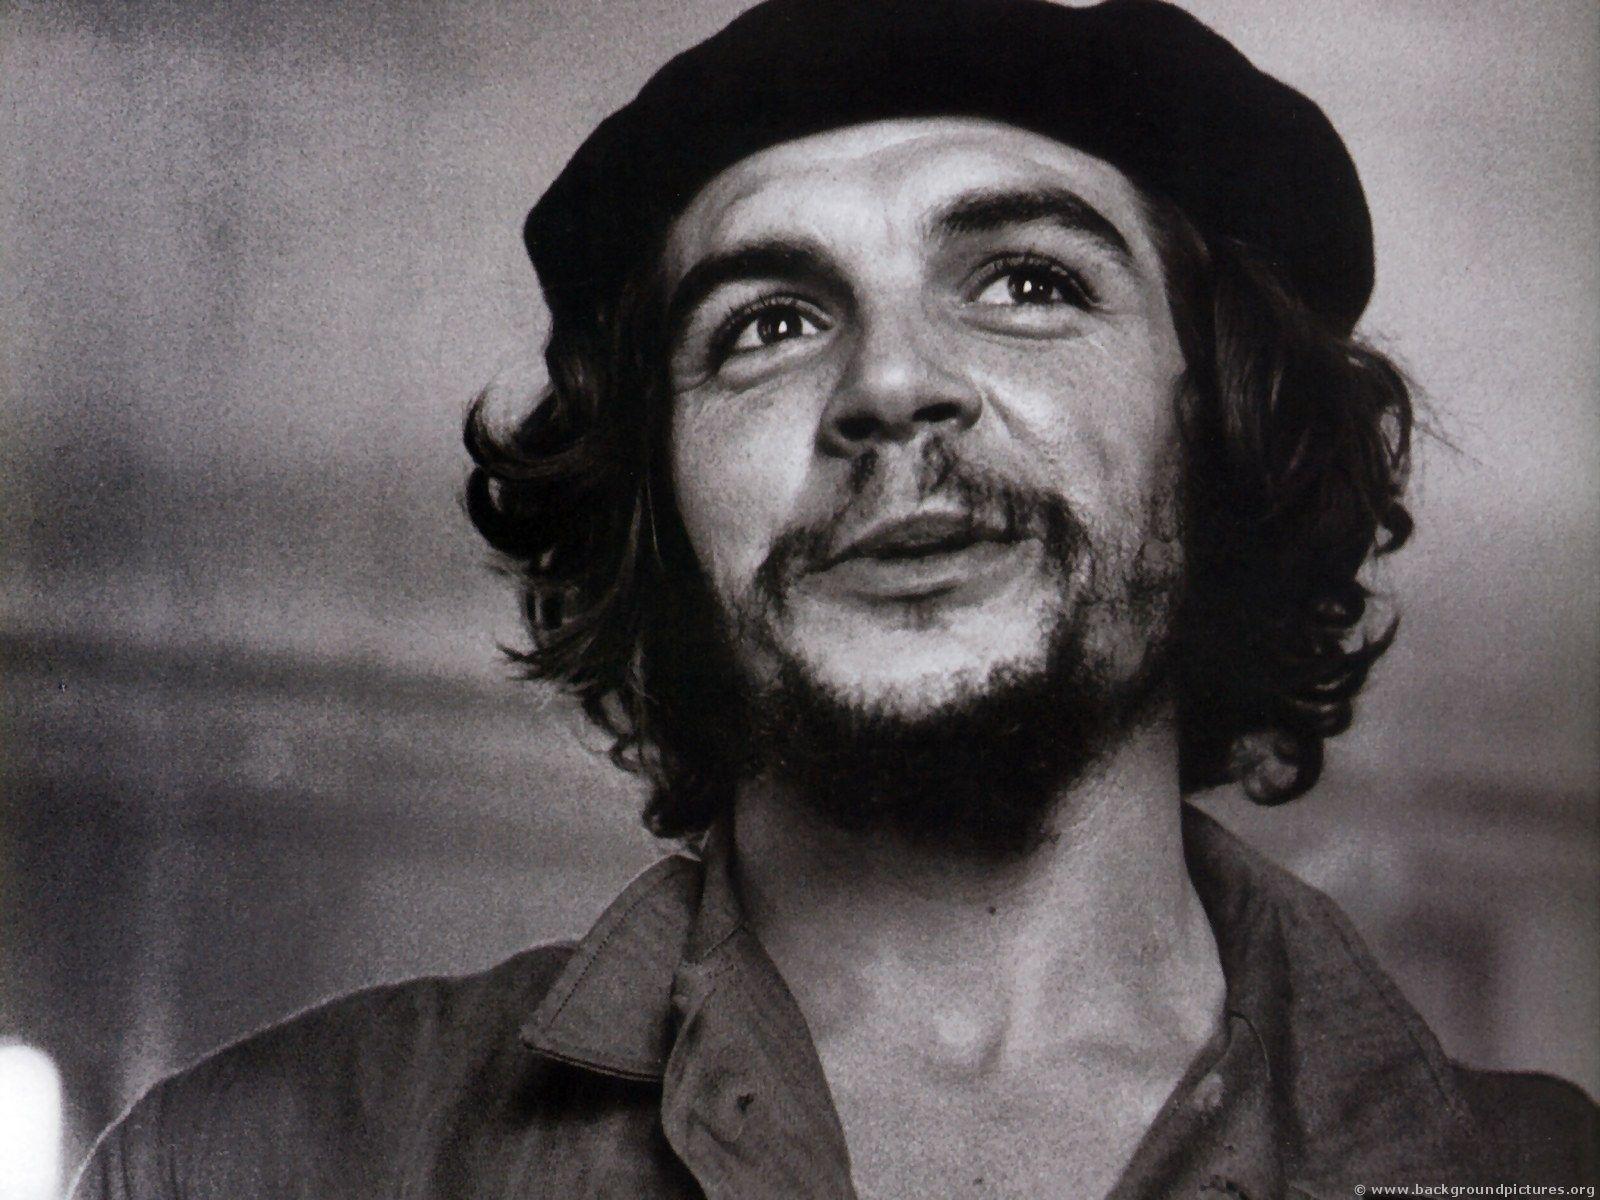 trololo blogg: Wallpaper Che Guevara